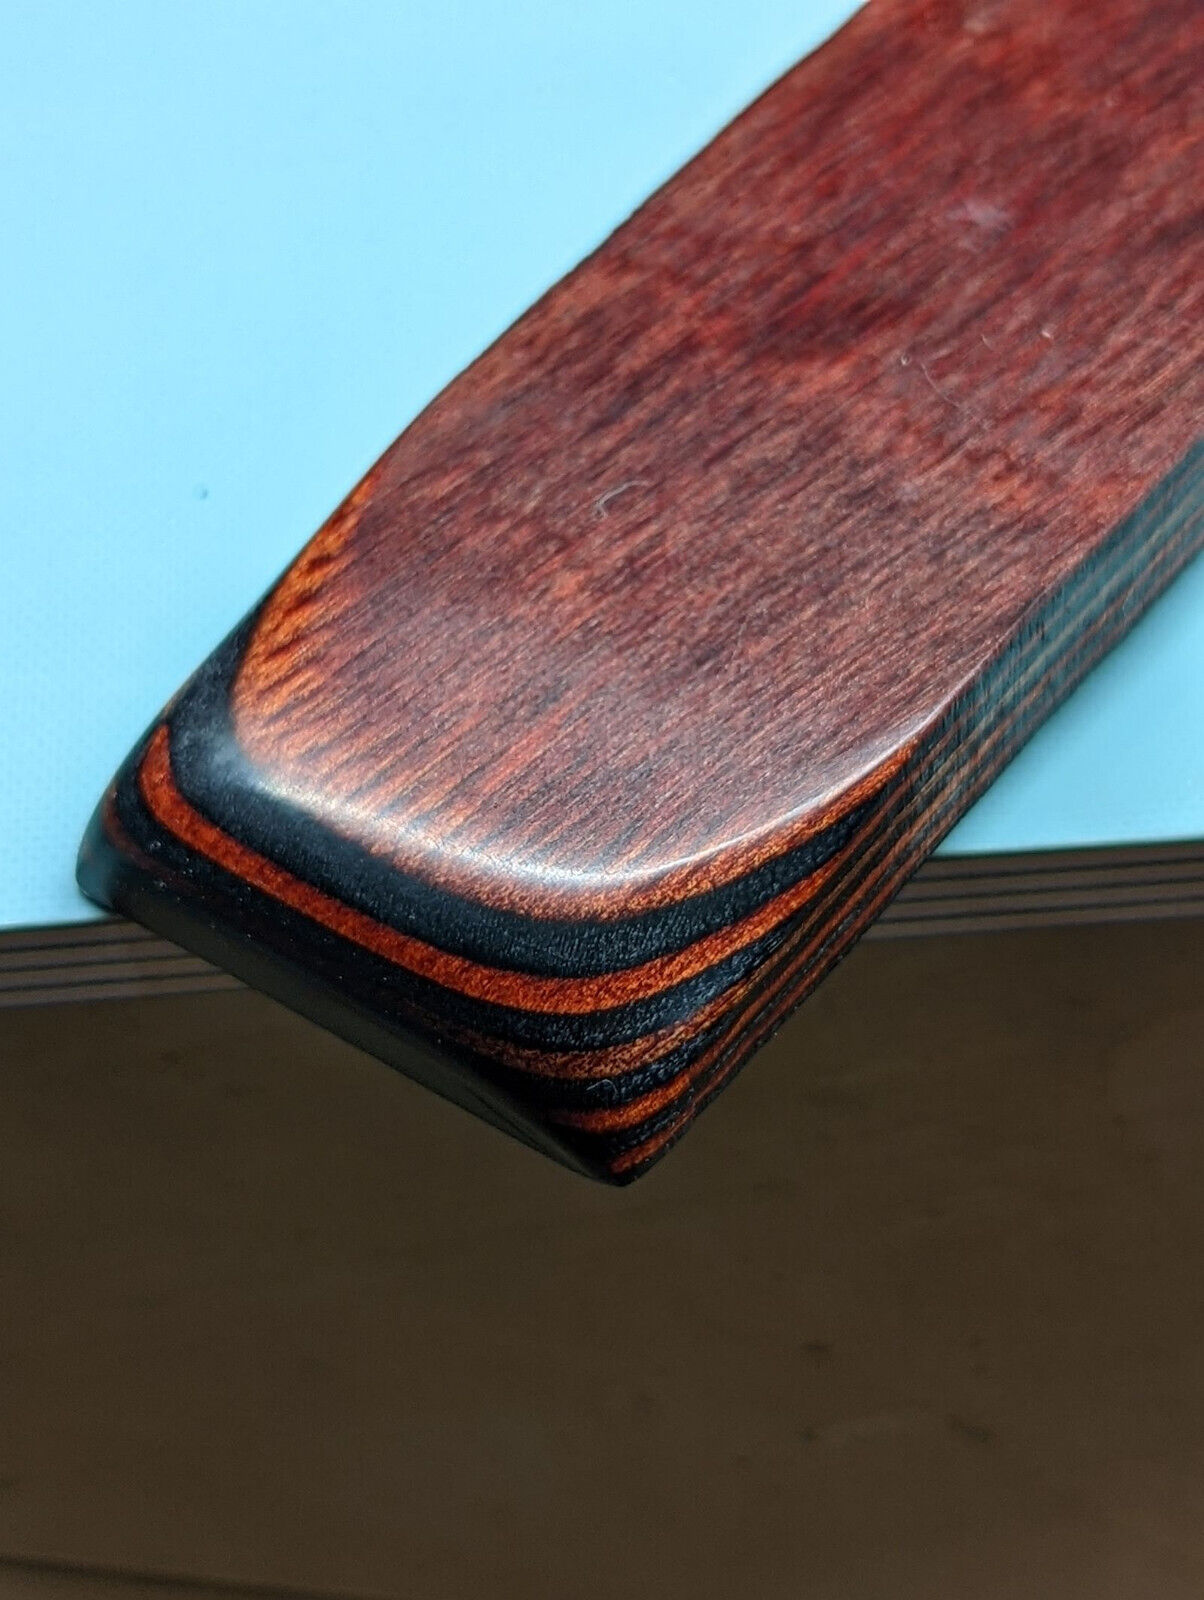 Vintage Phenolic/Wood Composite Knife Handle Scales - 5 x 1 1/2 x 3/8 - 1 Pair